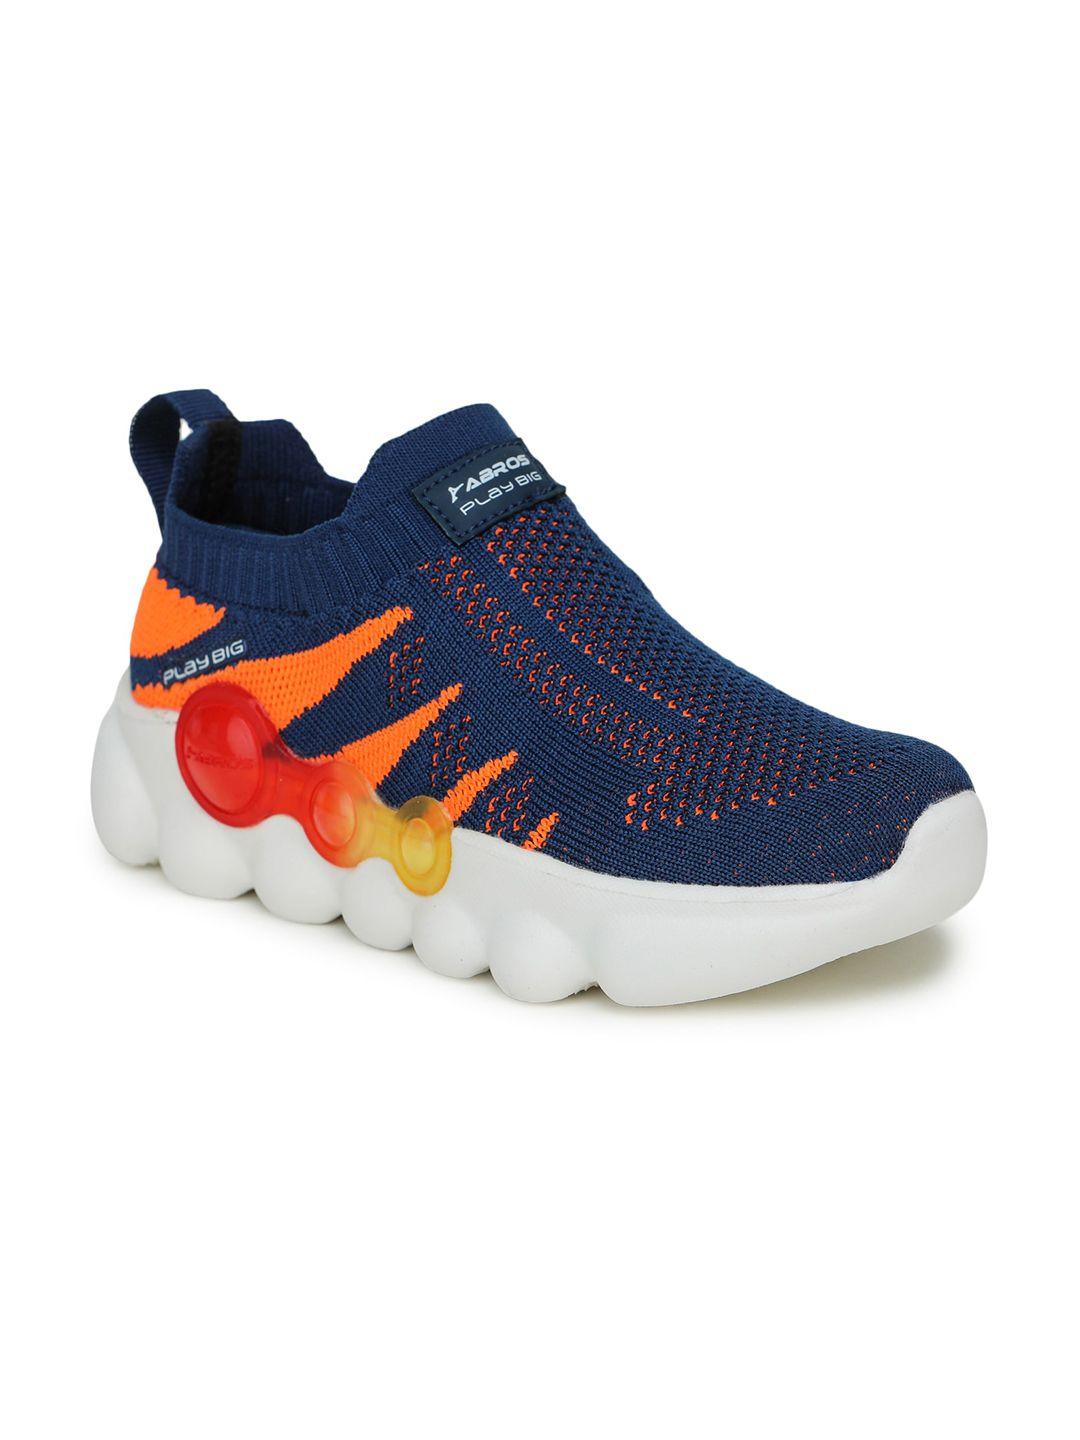 abros boys teal & orange run-n running shoes